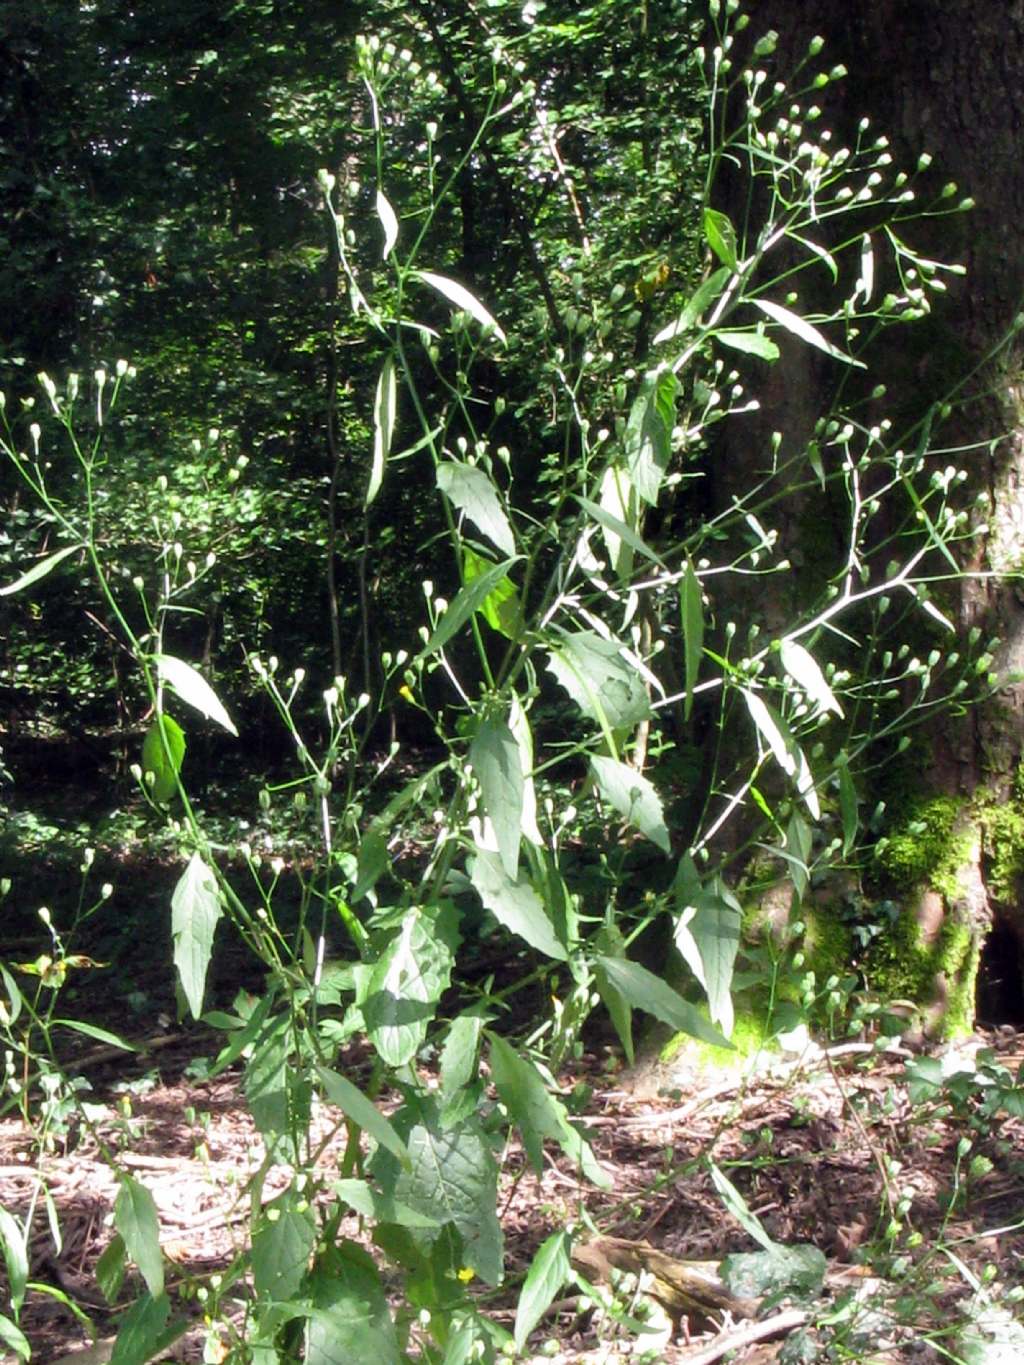 Asteraceae: Crepis capillaris?  No, cfr. Senecio nemorensis